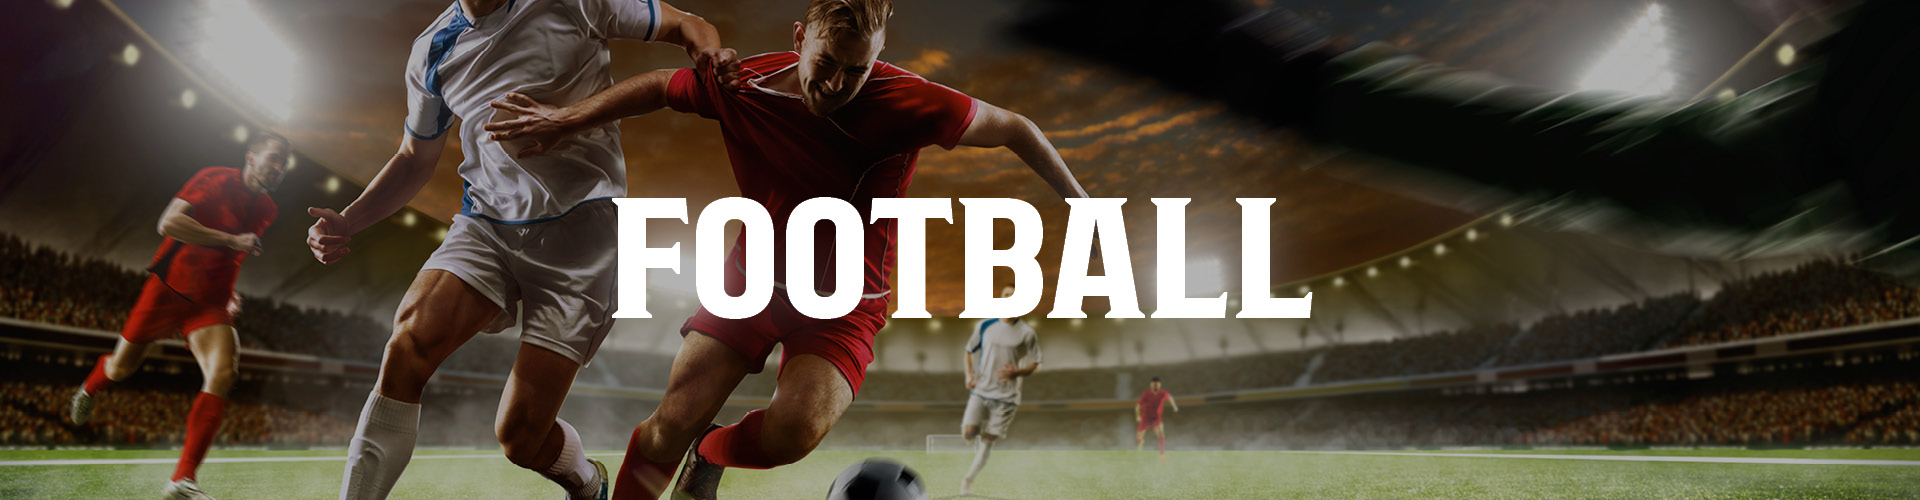 Watch Live Football in Derby at Windmill Inn Pub